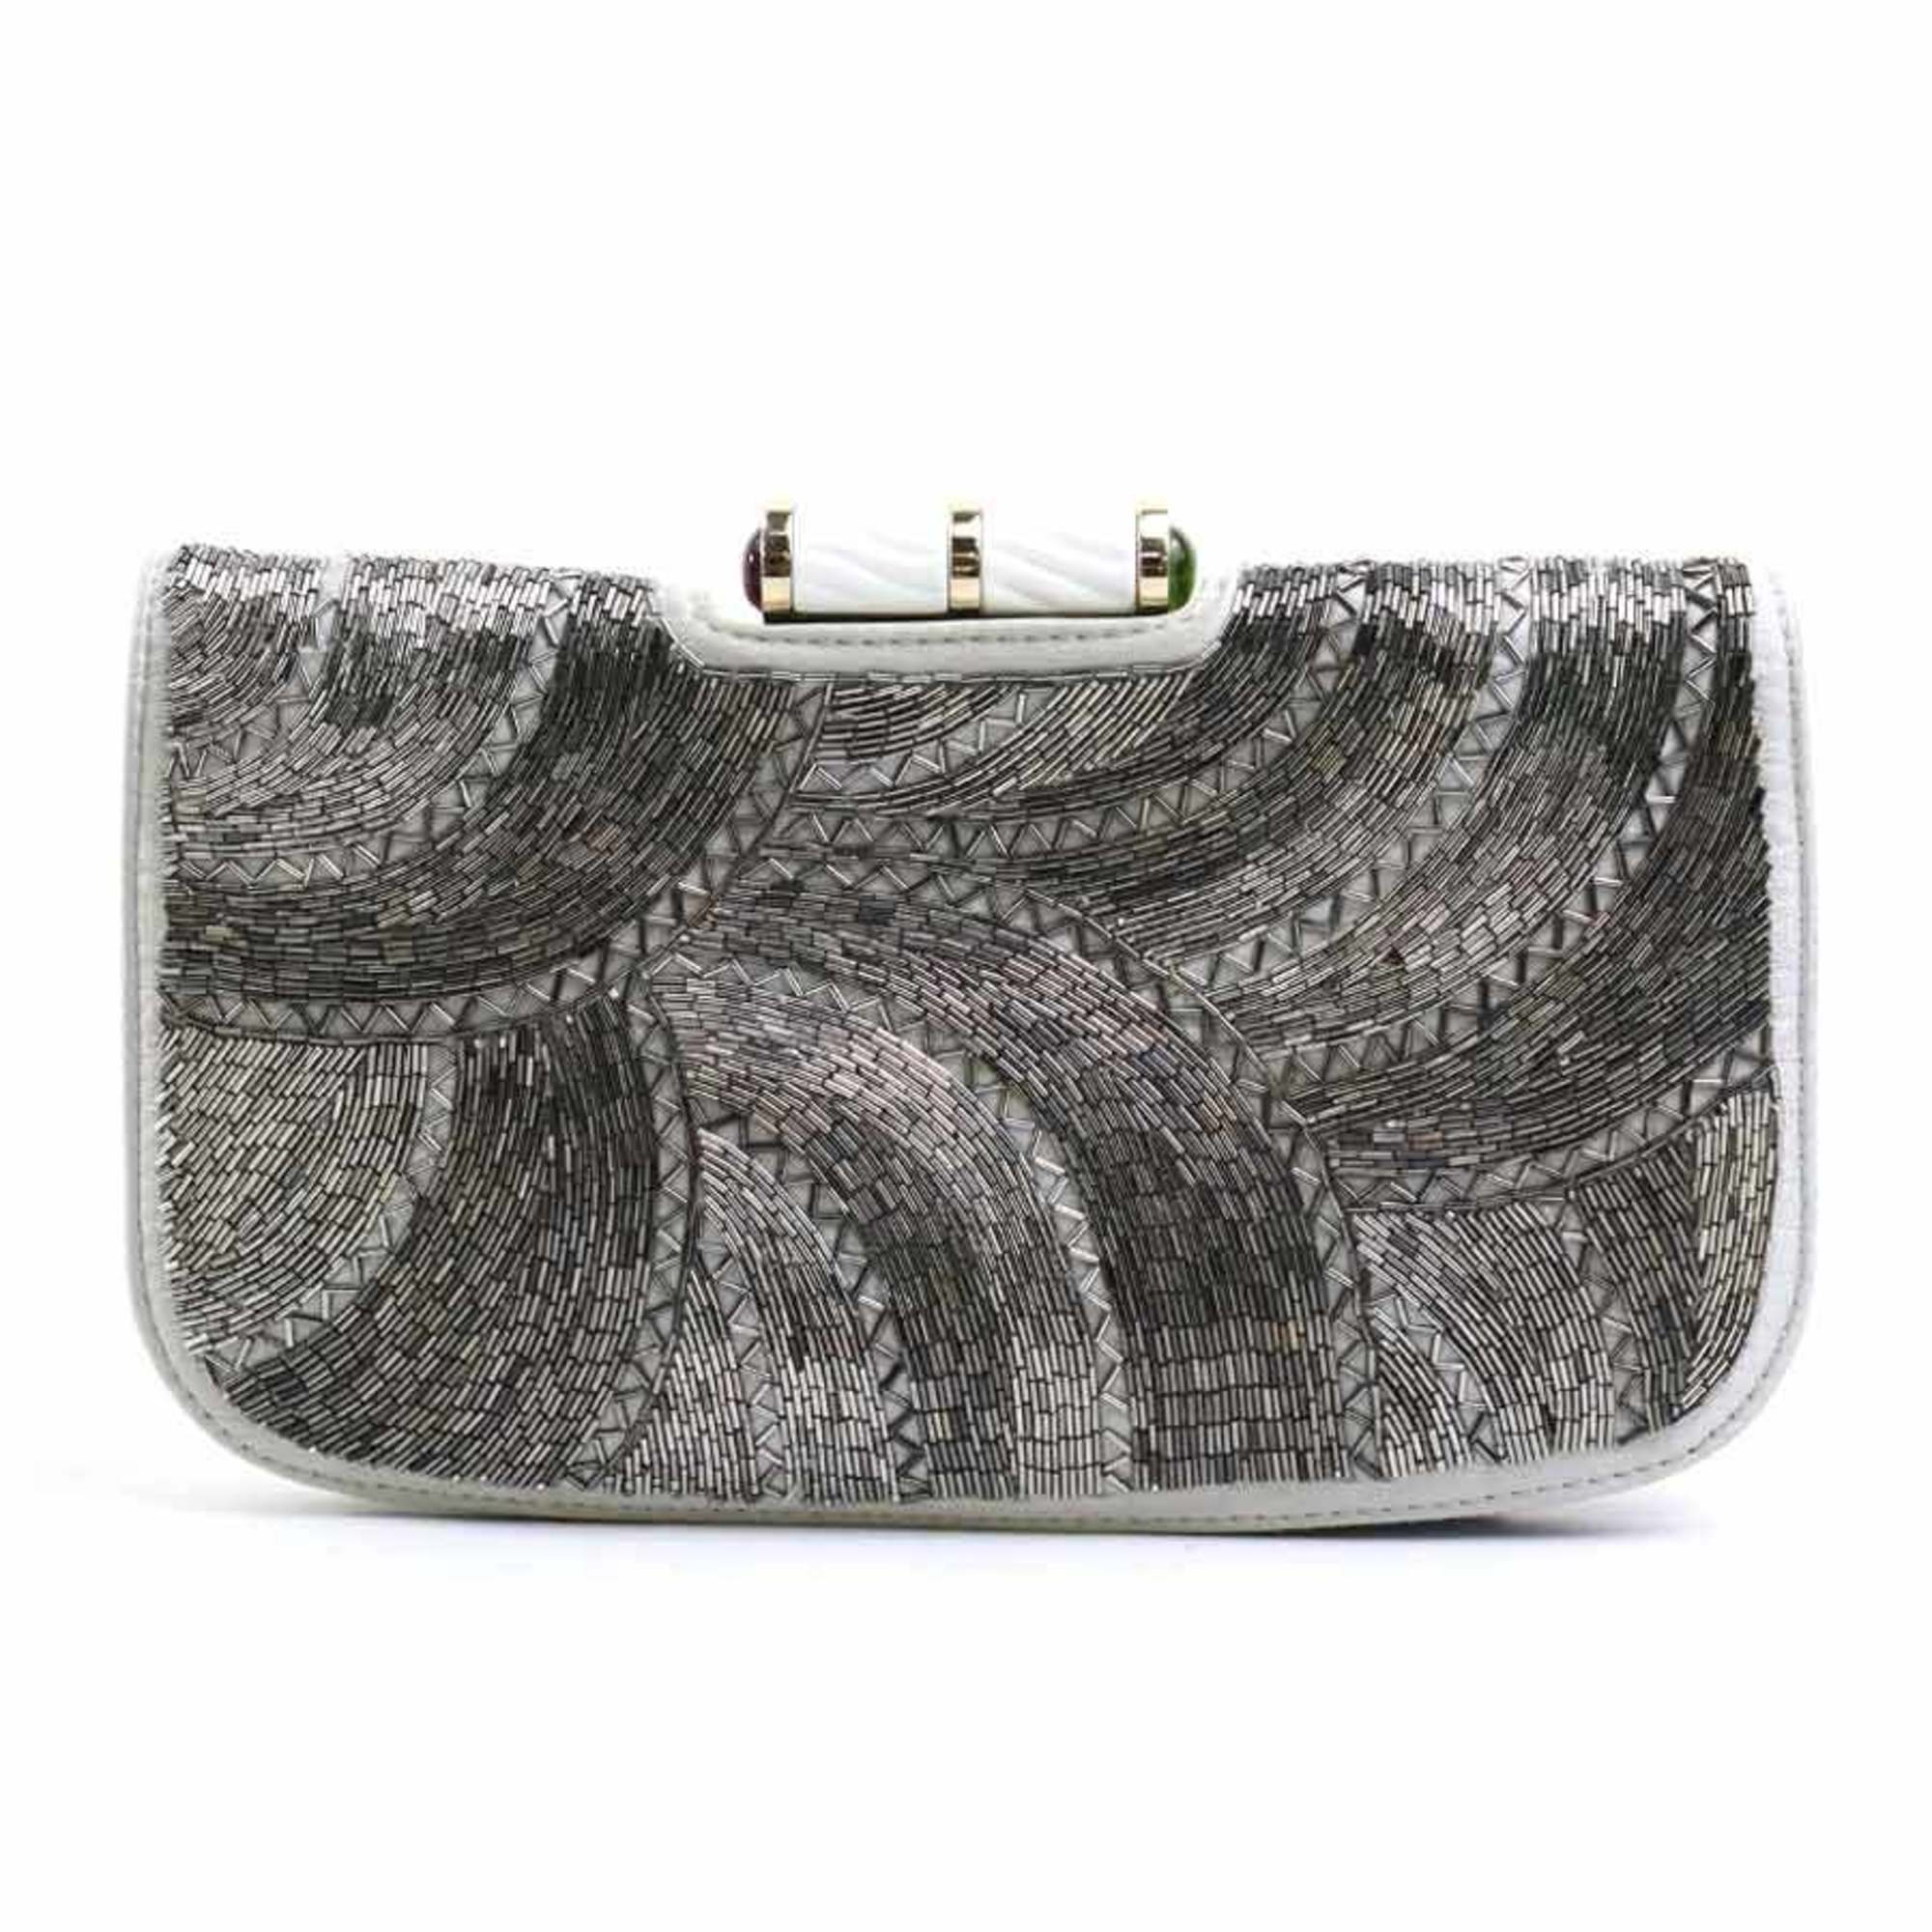 Clutch Bag Satin/Beads Grey Women's E58543g